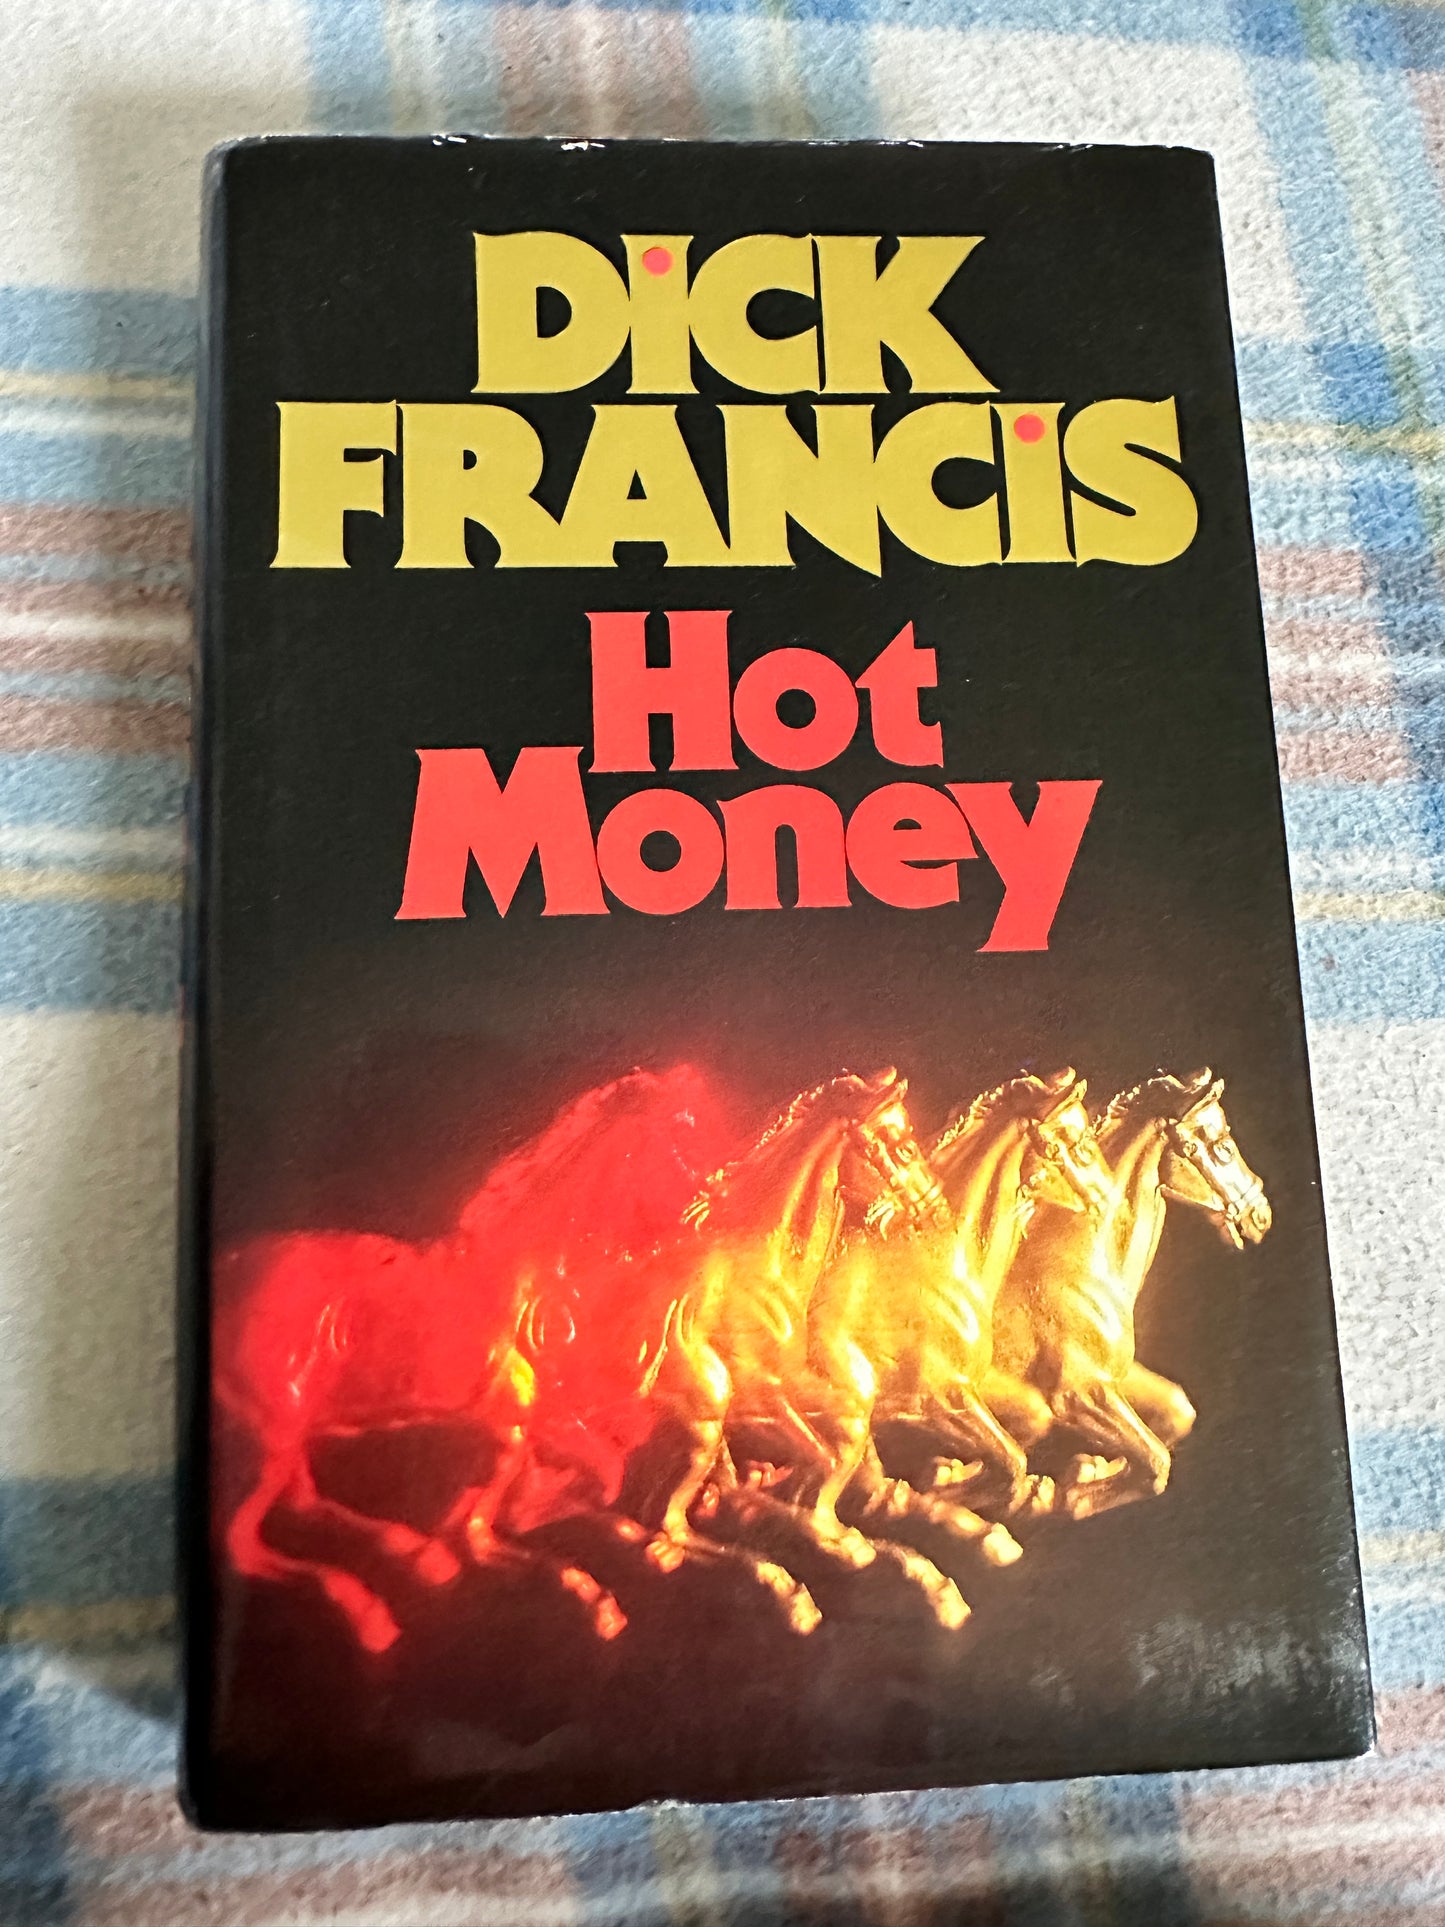 1987*1st* Hot Money - Dick Francis(Michael Joseph)